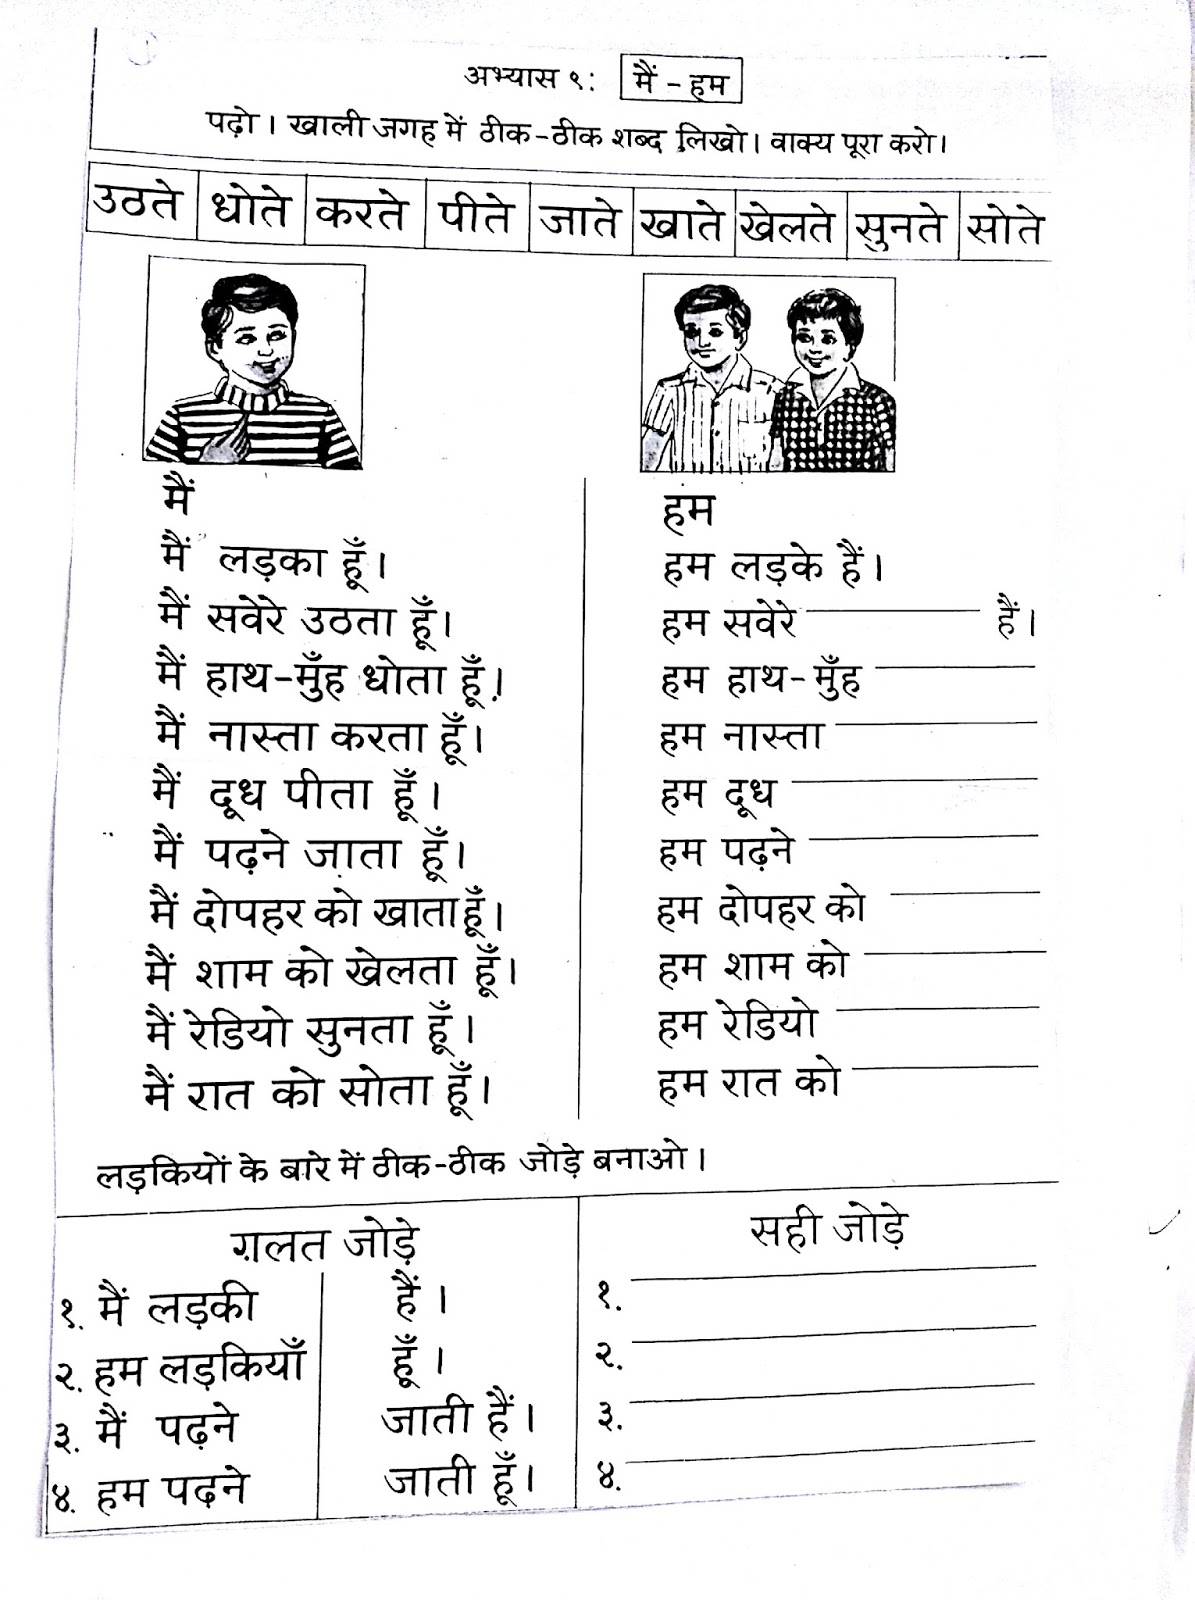 hindi-grammar-work-sheet-collection-for-classes-5-6-7-8-pronoun